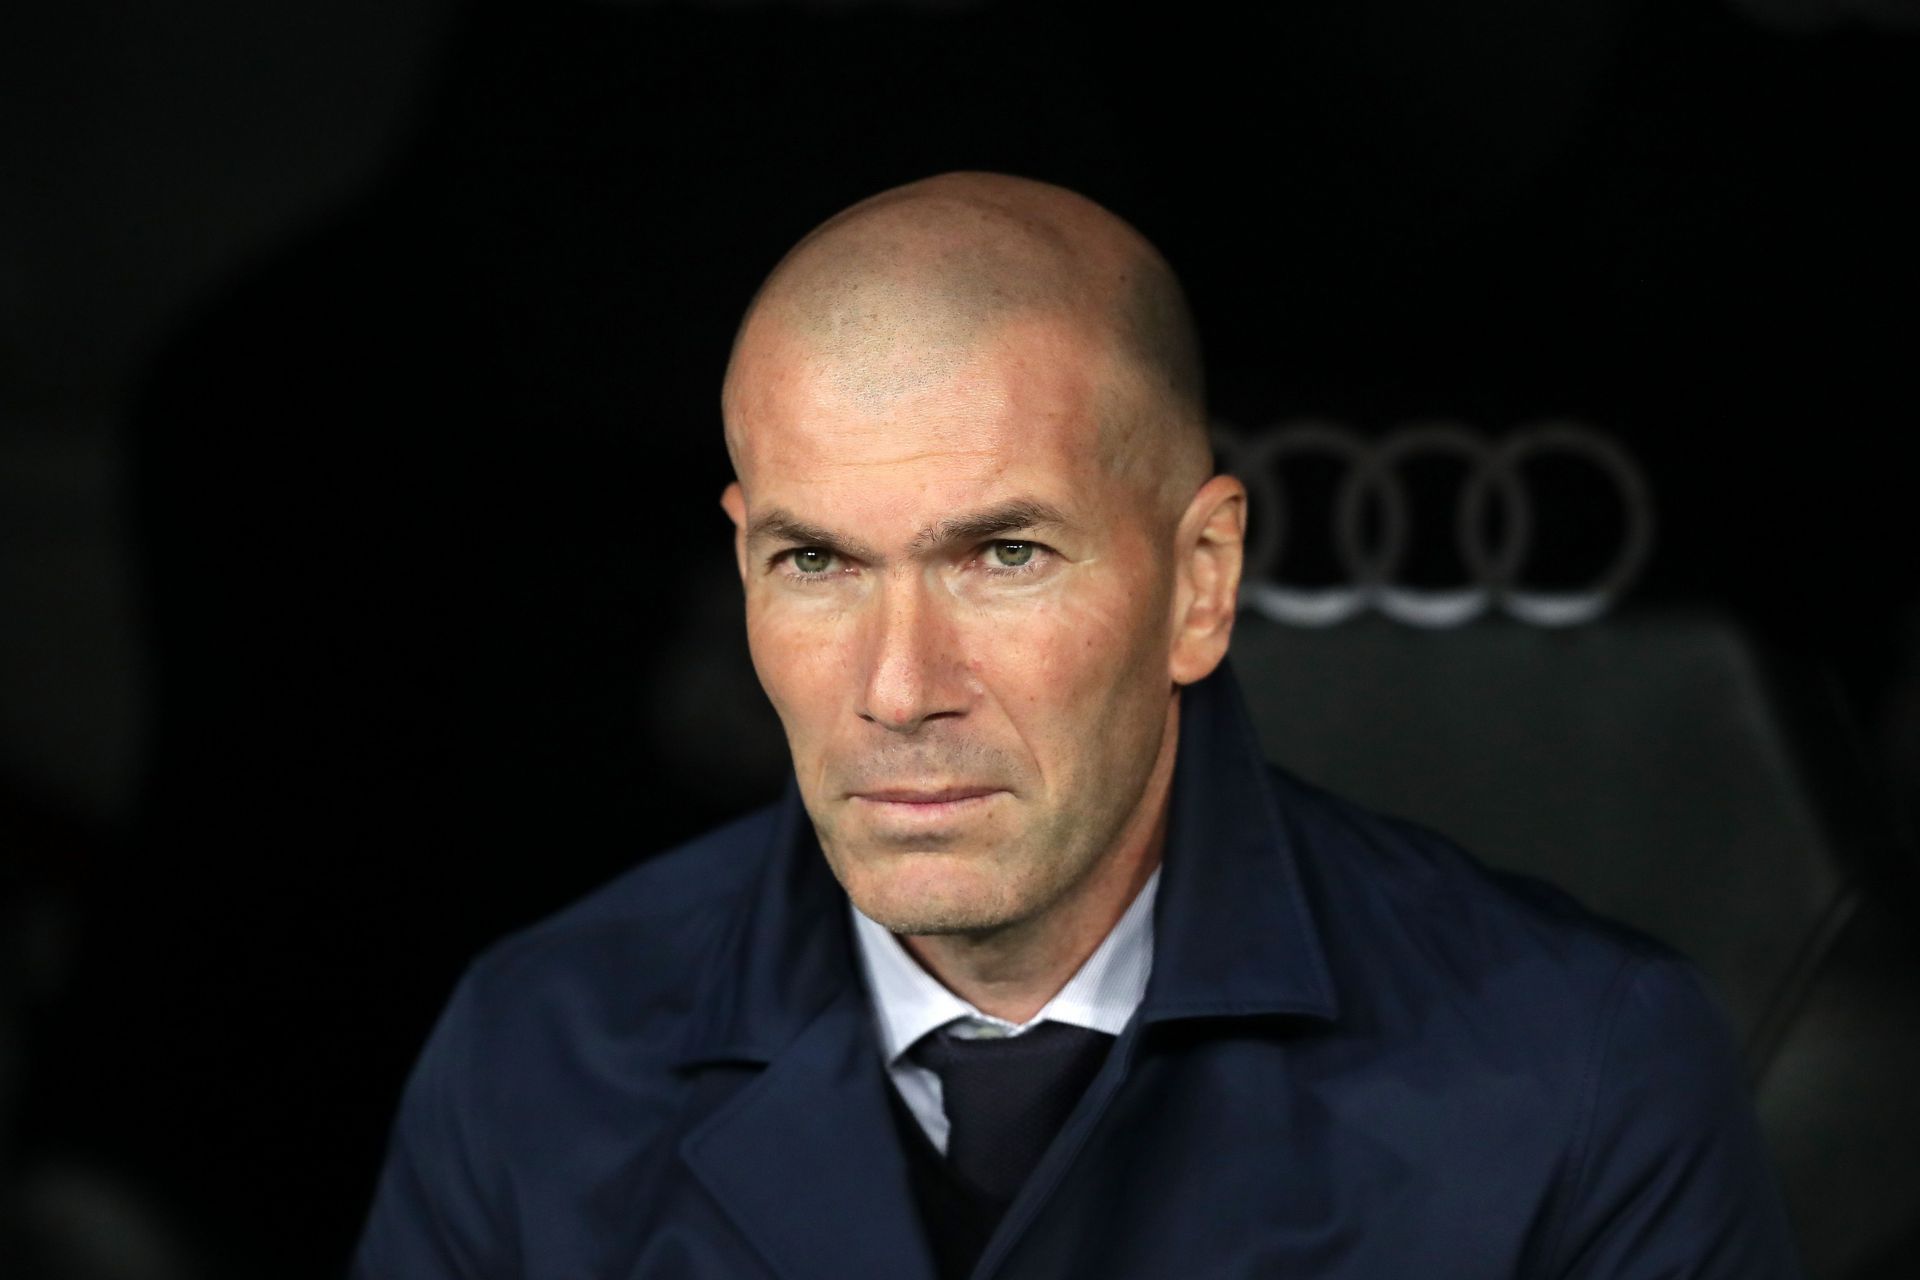 Zinedine Zidane started his coaching career in 2016